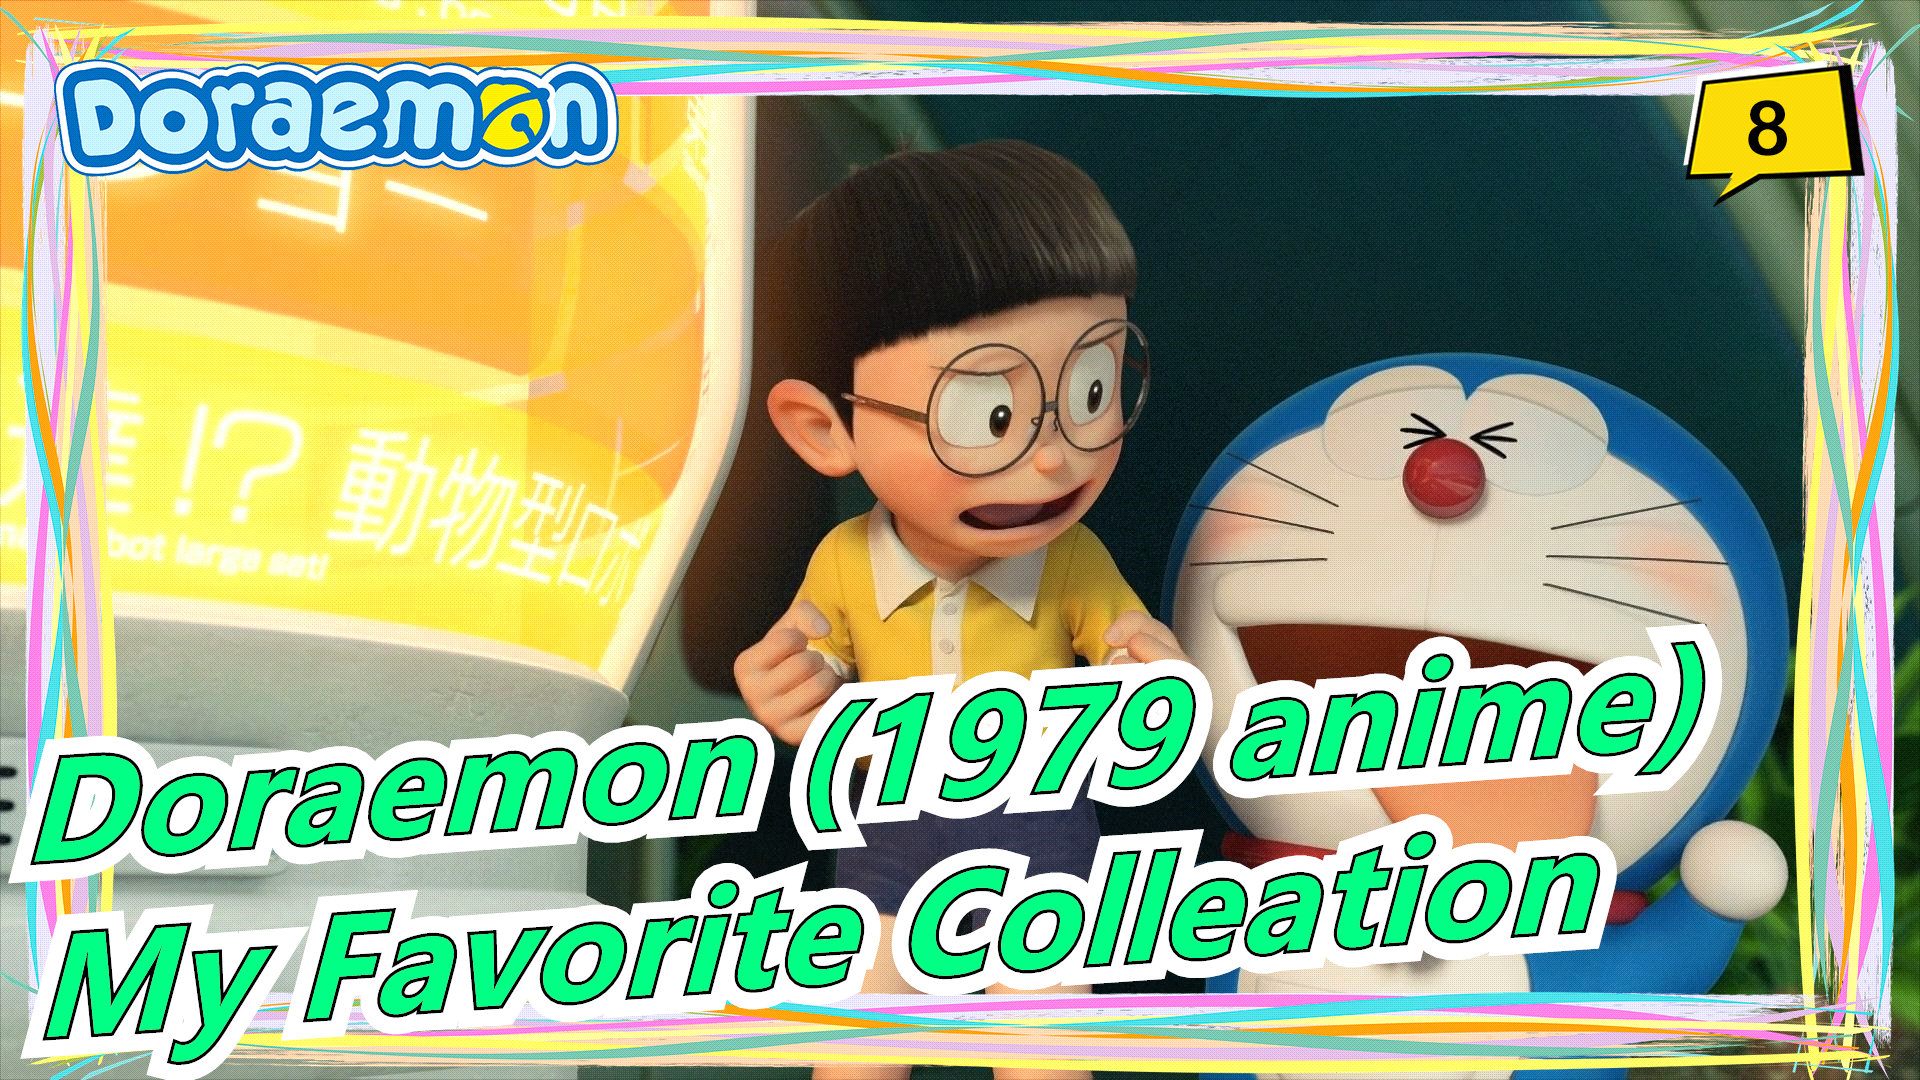 Doraemon (1979 anime)/720p/DVDRip] Classic Series, My Favorite Colleation,  CN Subtitled_A8 - Bilibili